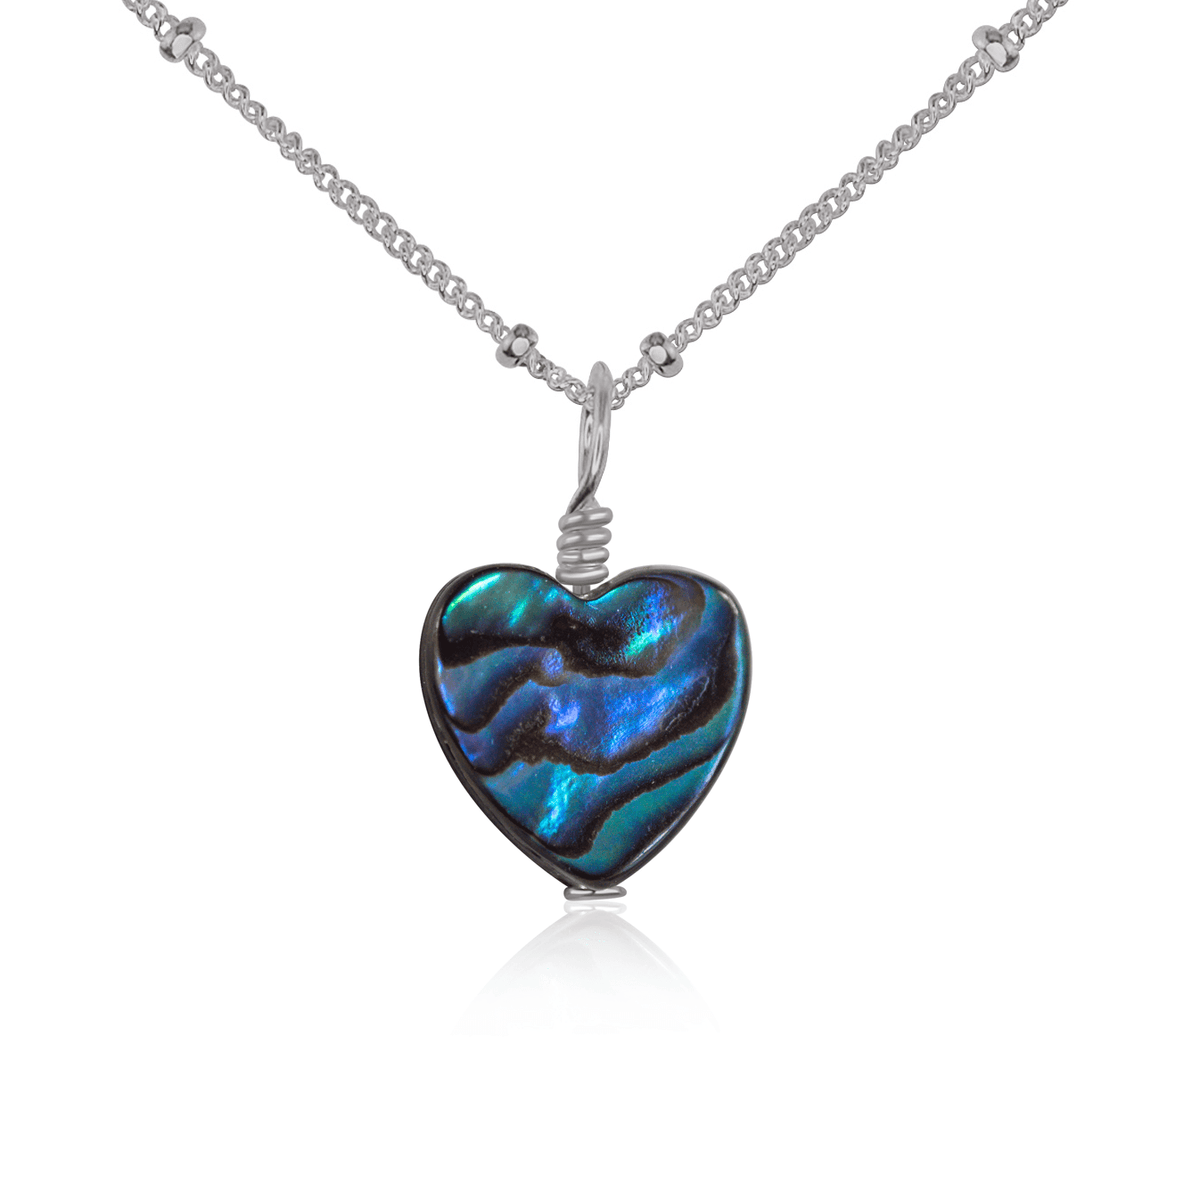 Abalone Shell Heart Pendant Necklace - Abalone Shell Heart Pendant Necklace - Stainless Steel / Satellite - Luna Tide Handmade Crystal Jewellery